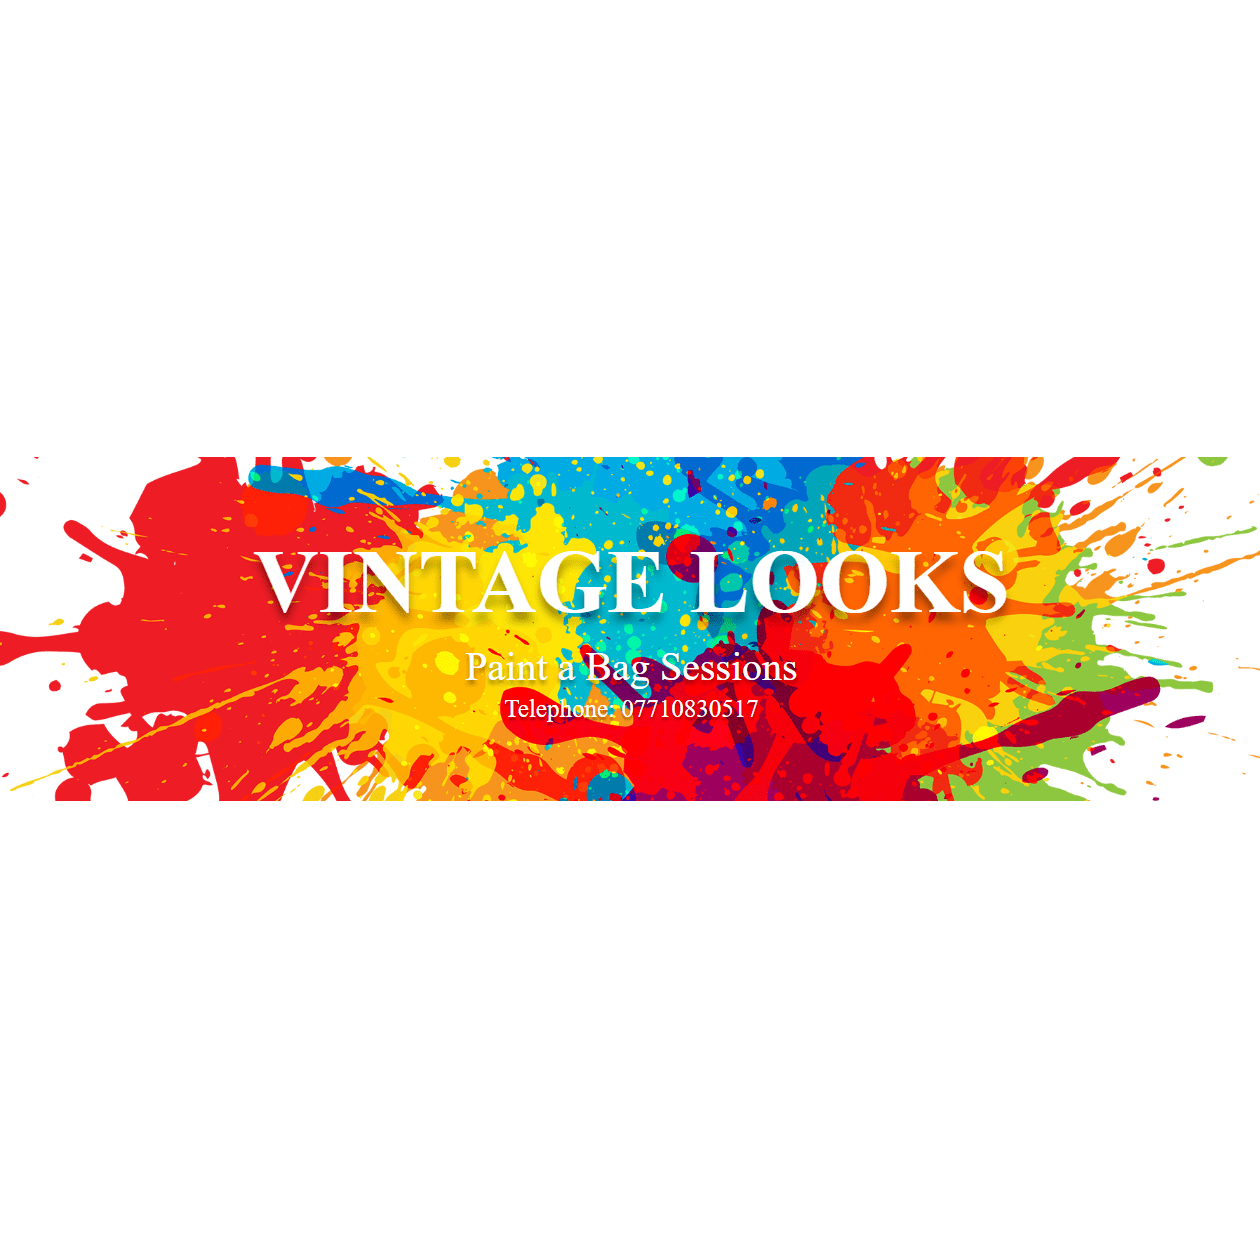 LOGO Vintage Looks Steyning 07710 830517